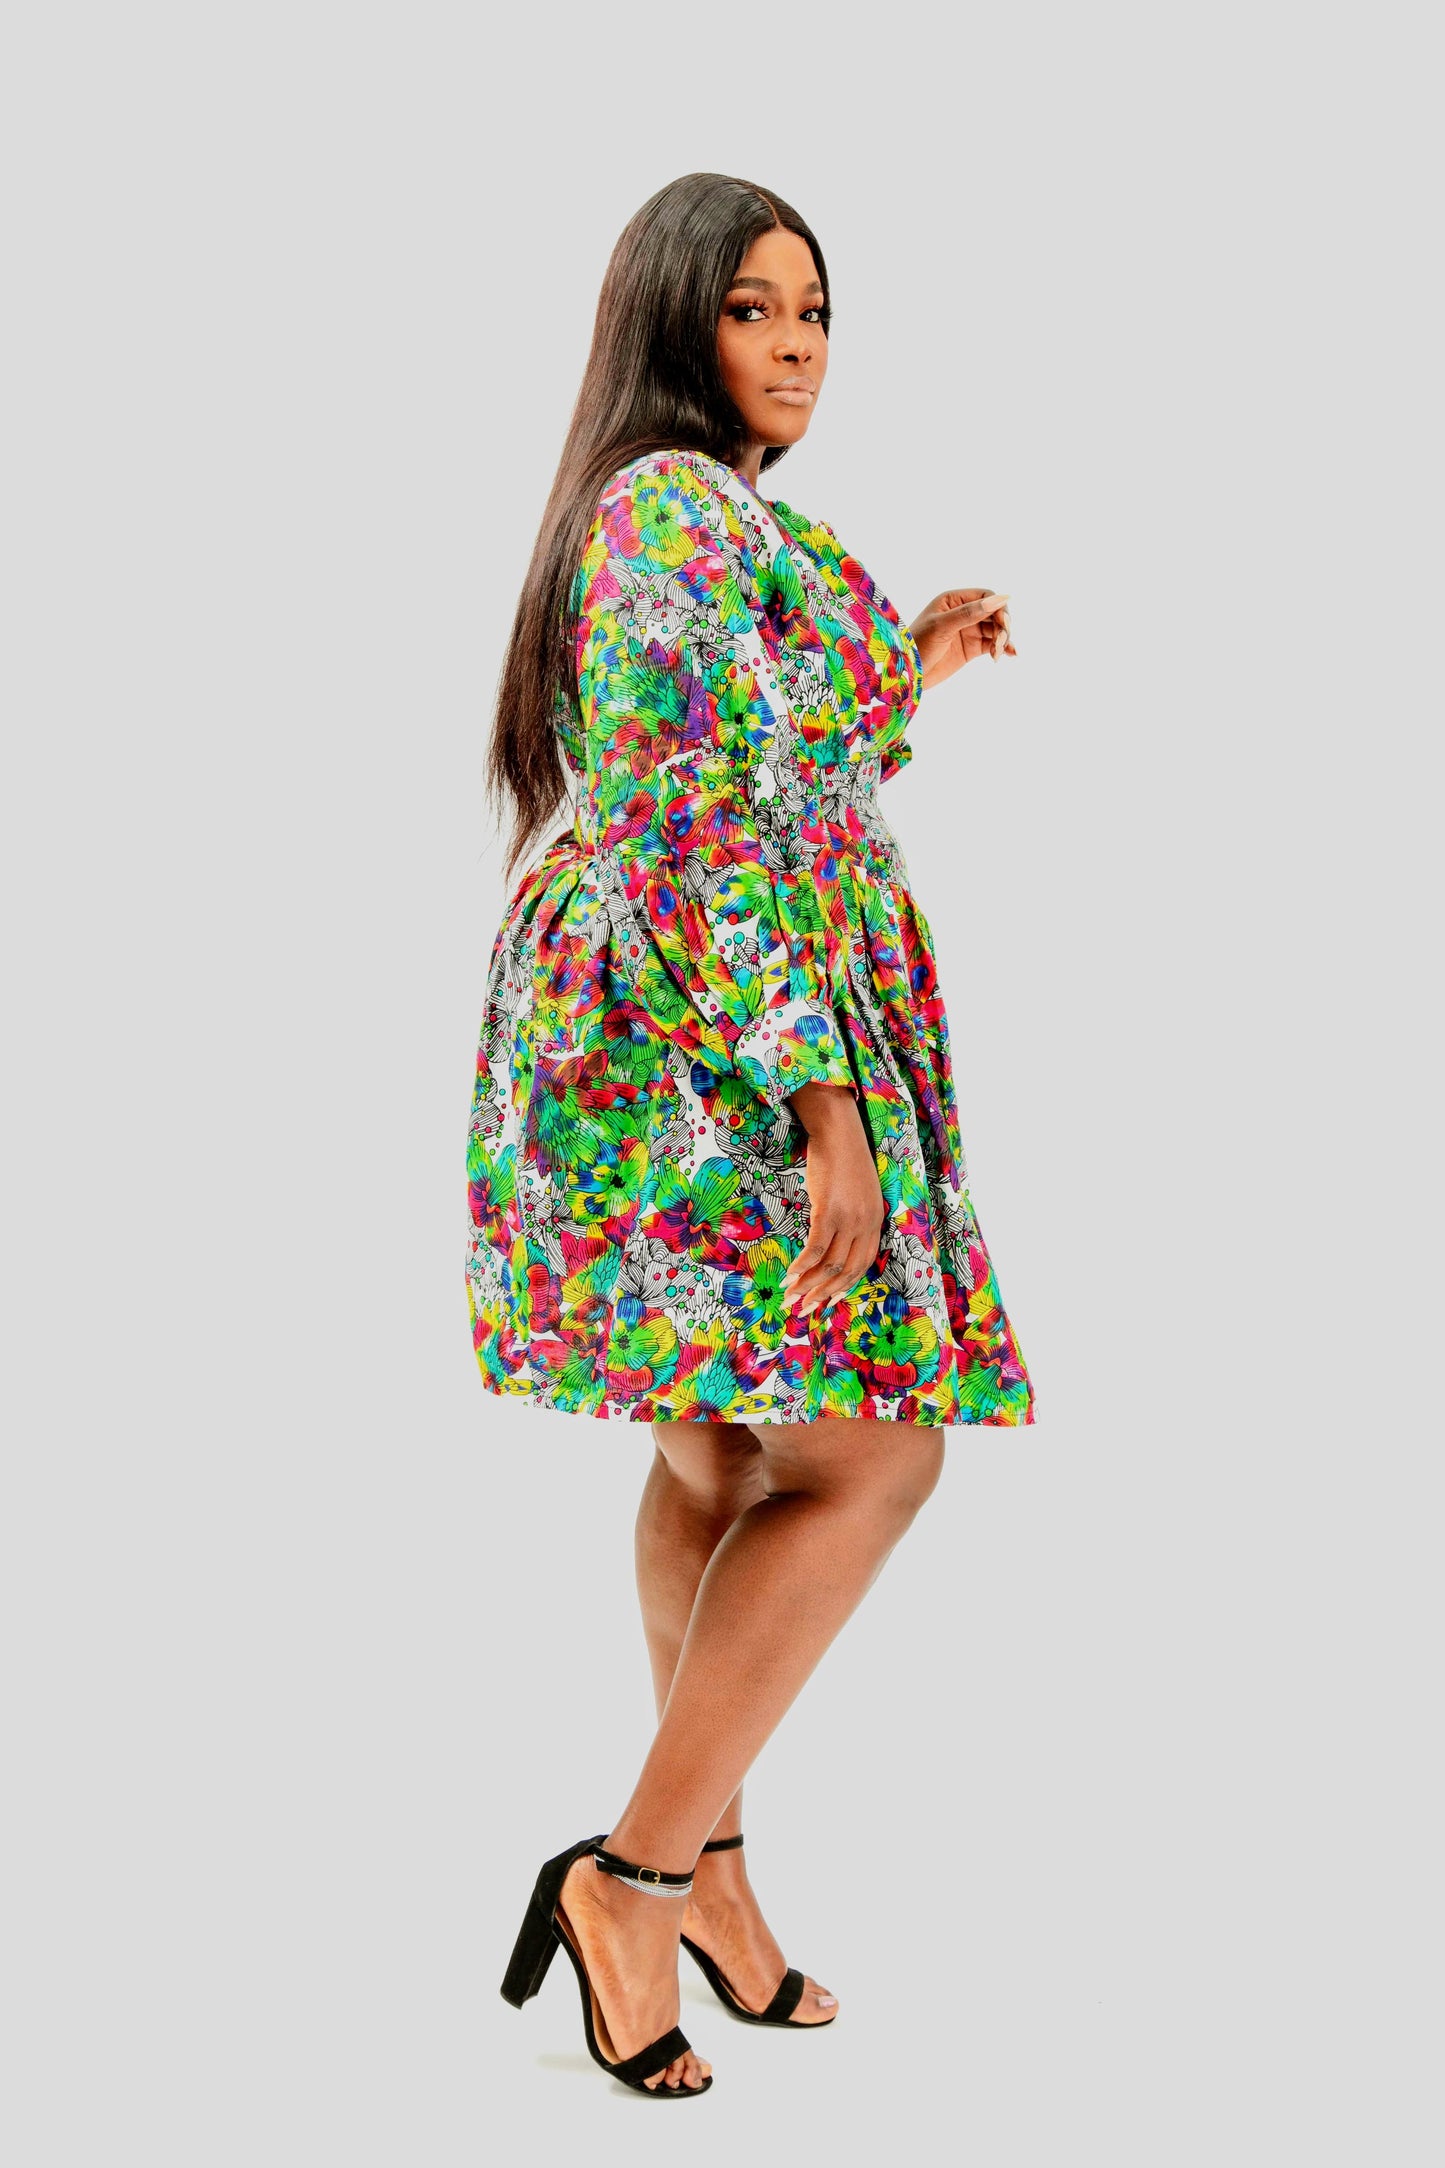 Mbira - African Print Corset Dress